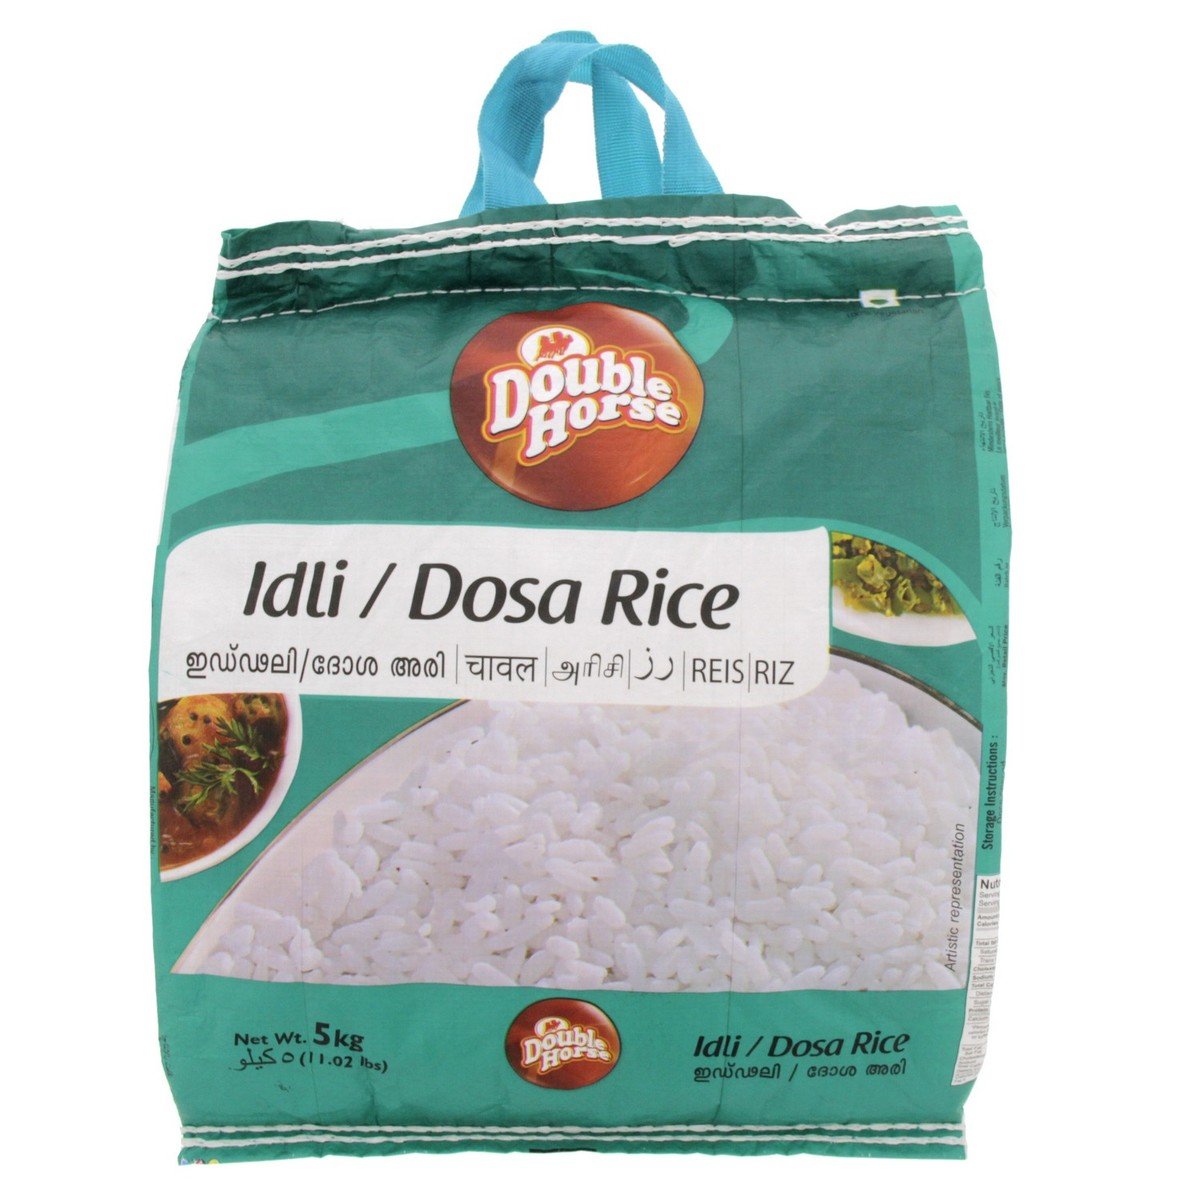 Double Horse Idli/Dosa Rice 5 kg